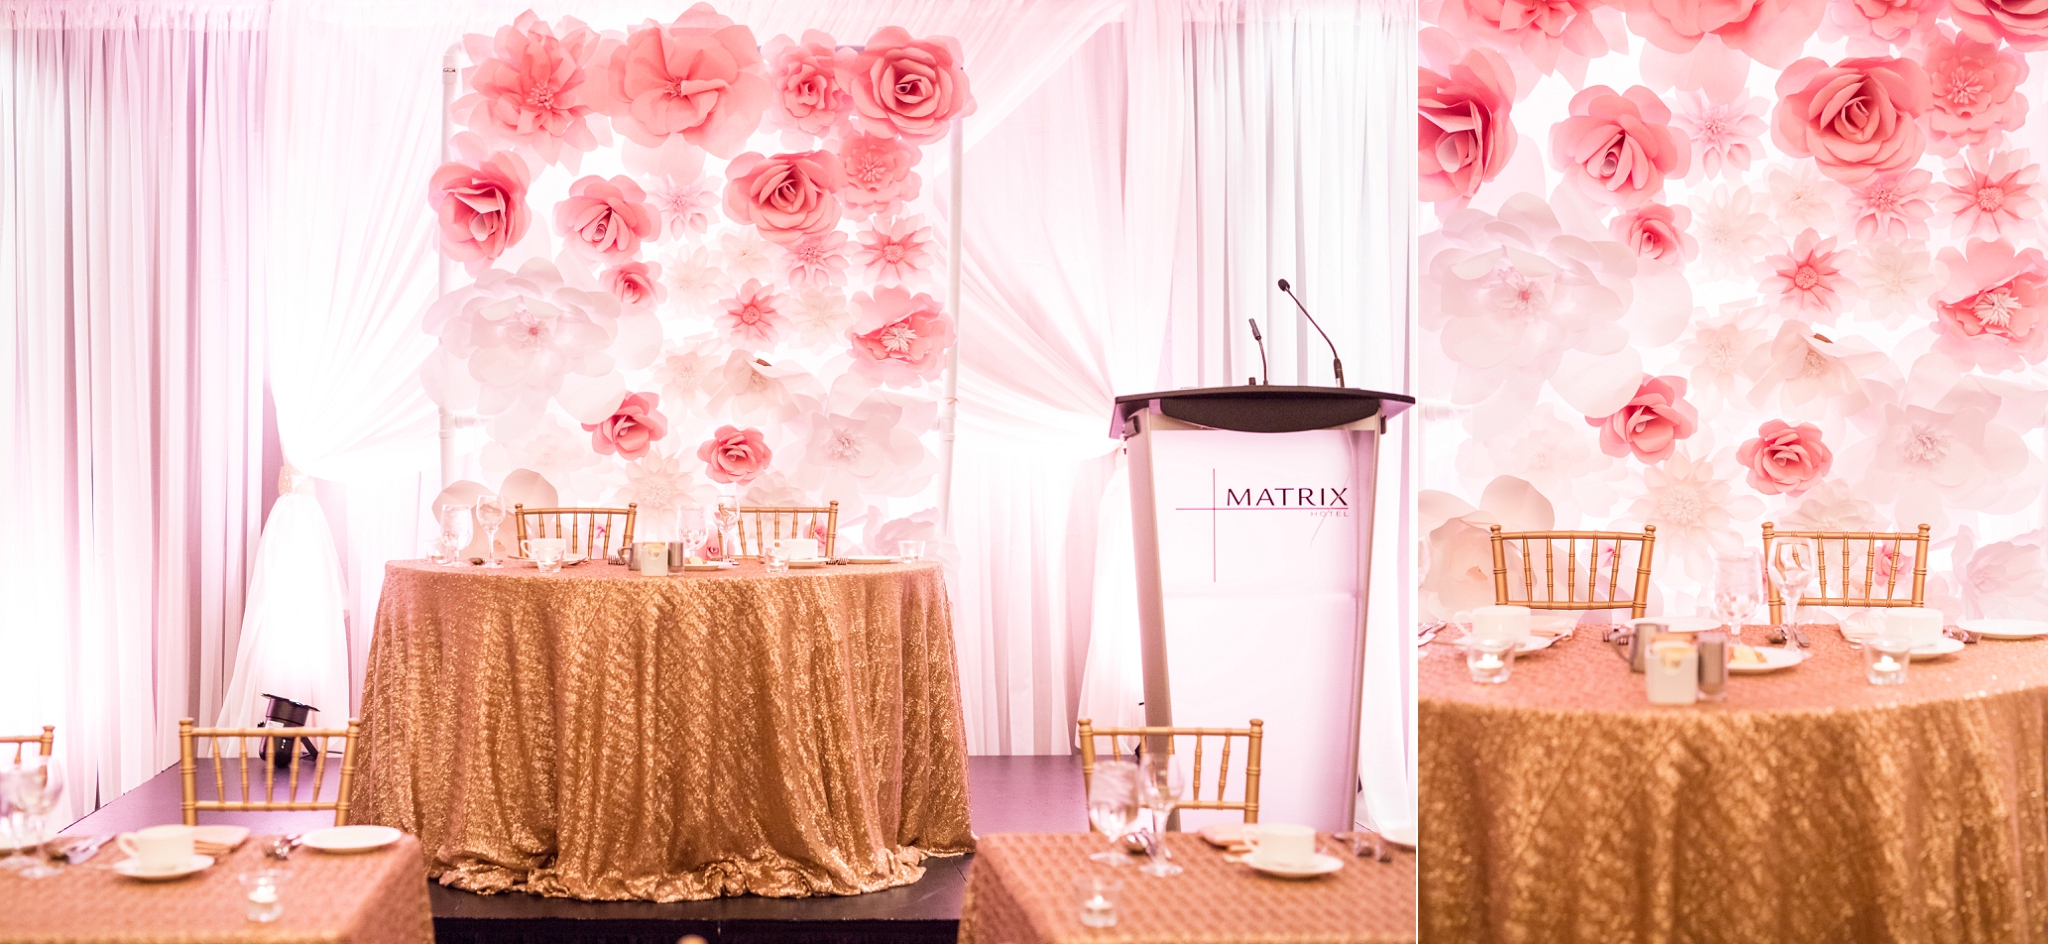 matrix hotel edmonton wedding photos blush and gold wedding decor